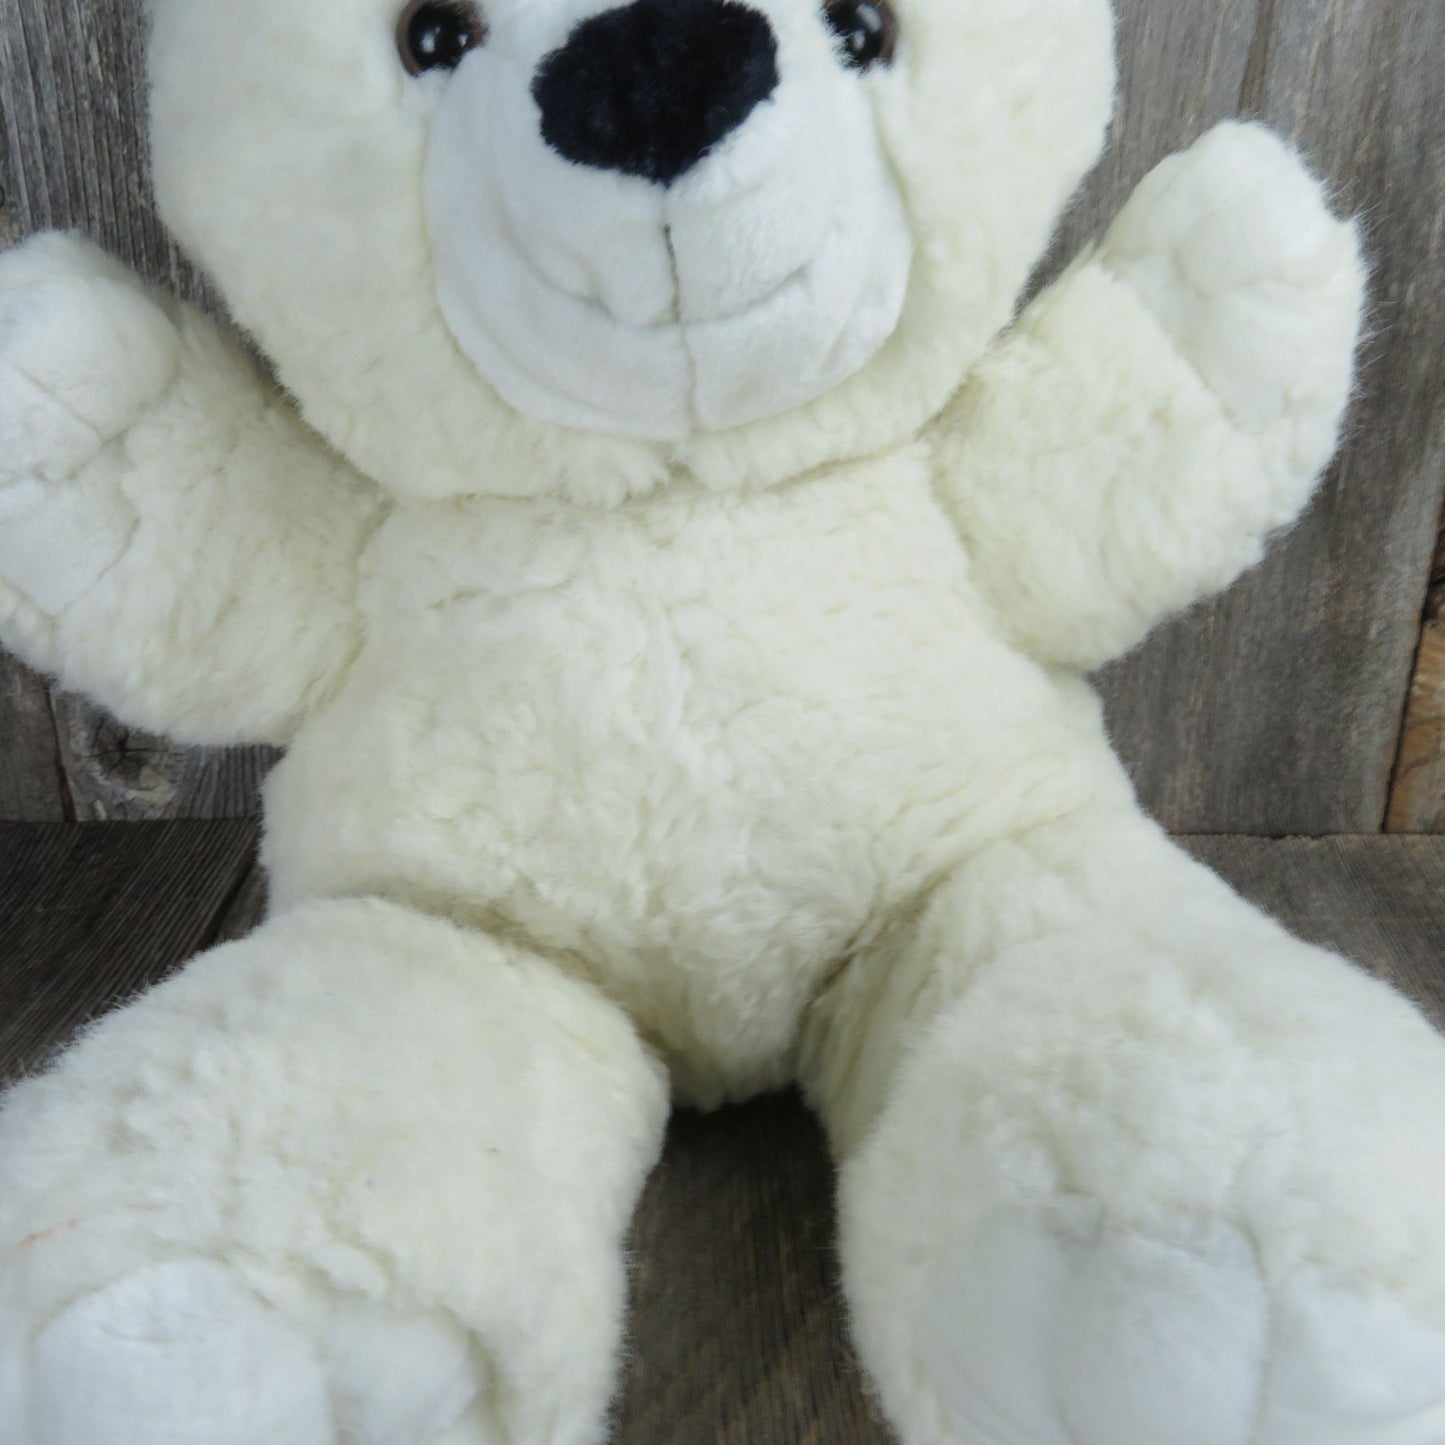 Vintage Teddy Bear Plush White Black Fuzzy Nose Stuffed Animal Chosun International